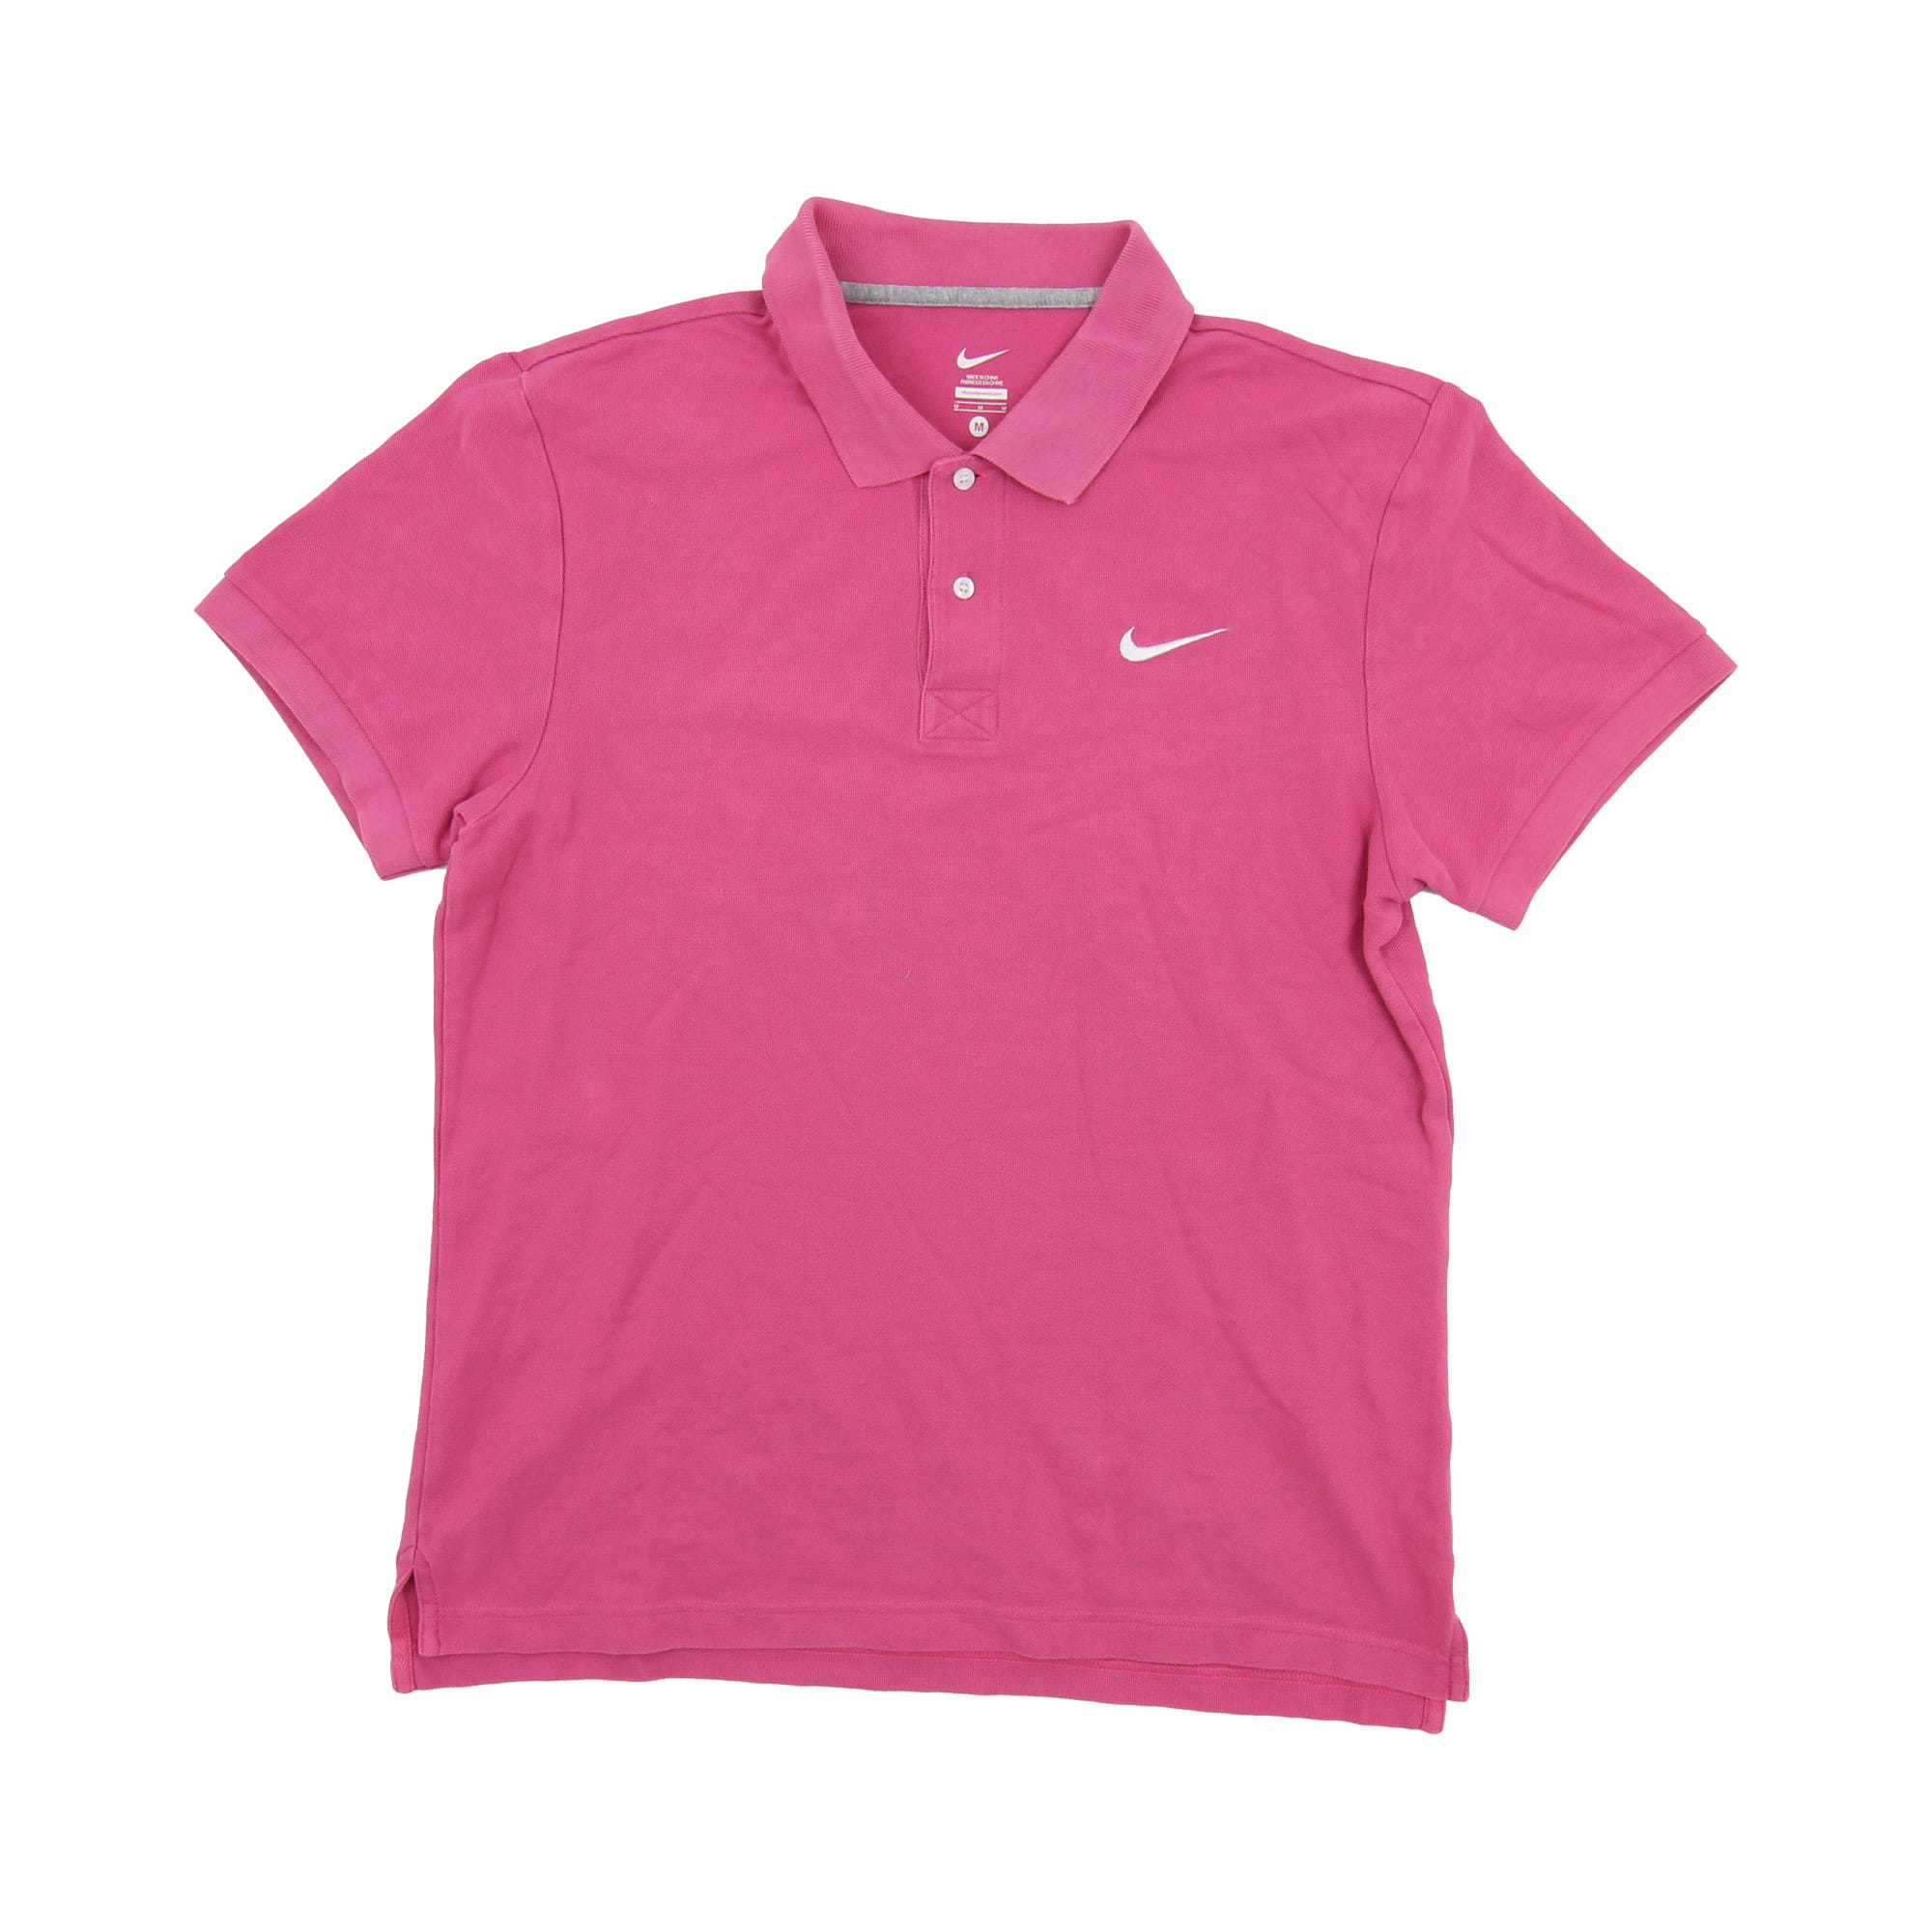 Nike Swoosh Logo Polo T-Shirt - M